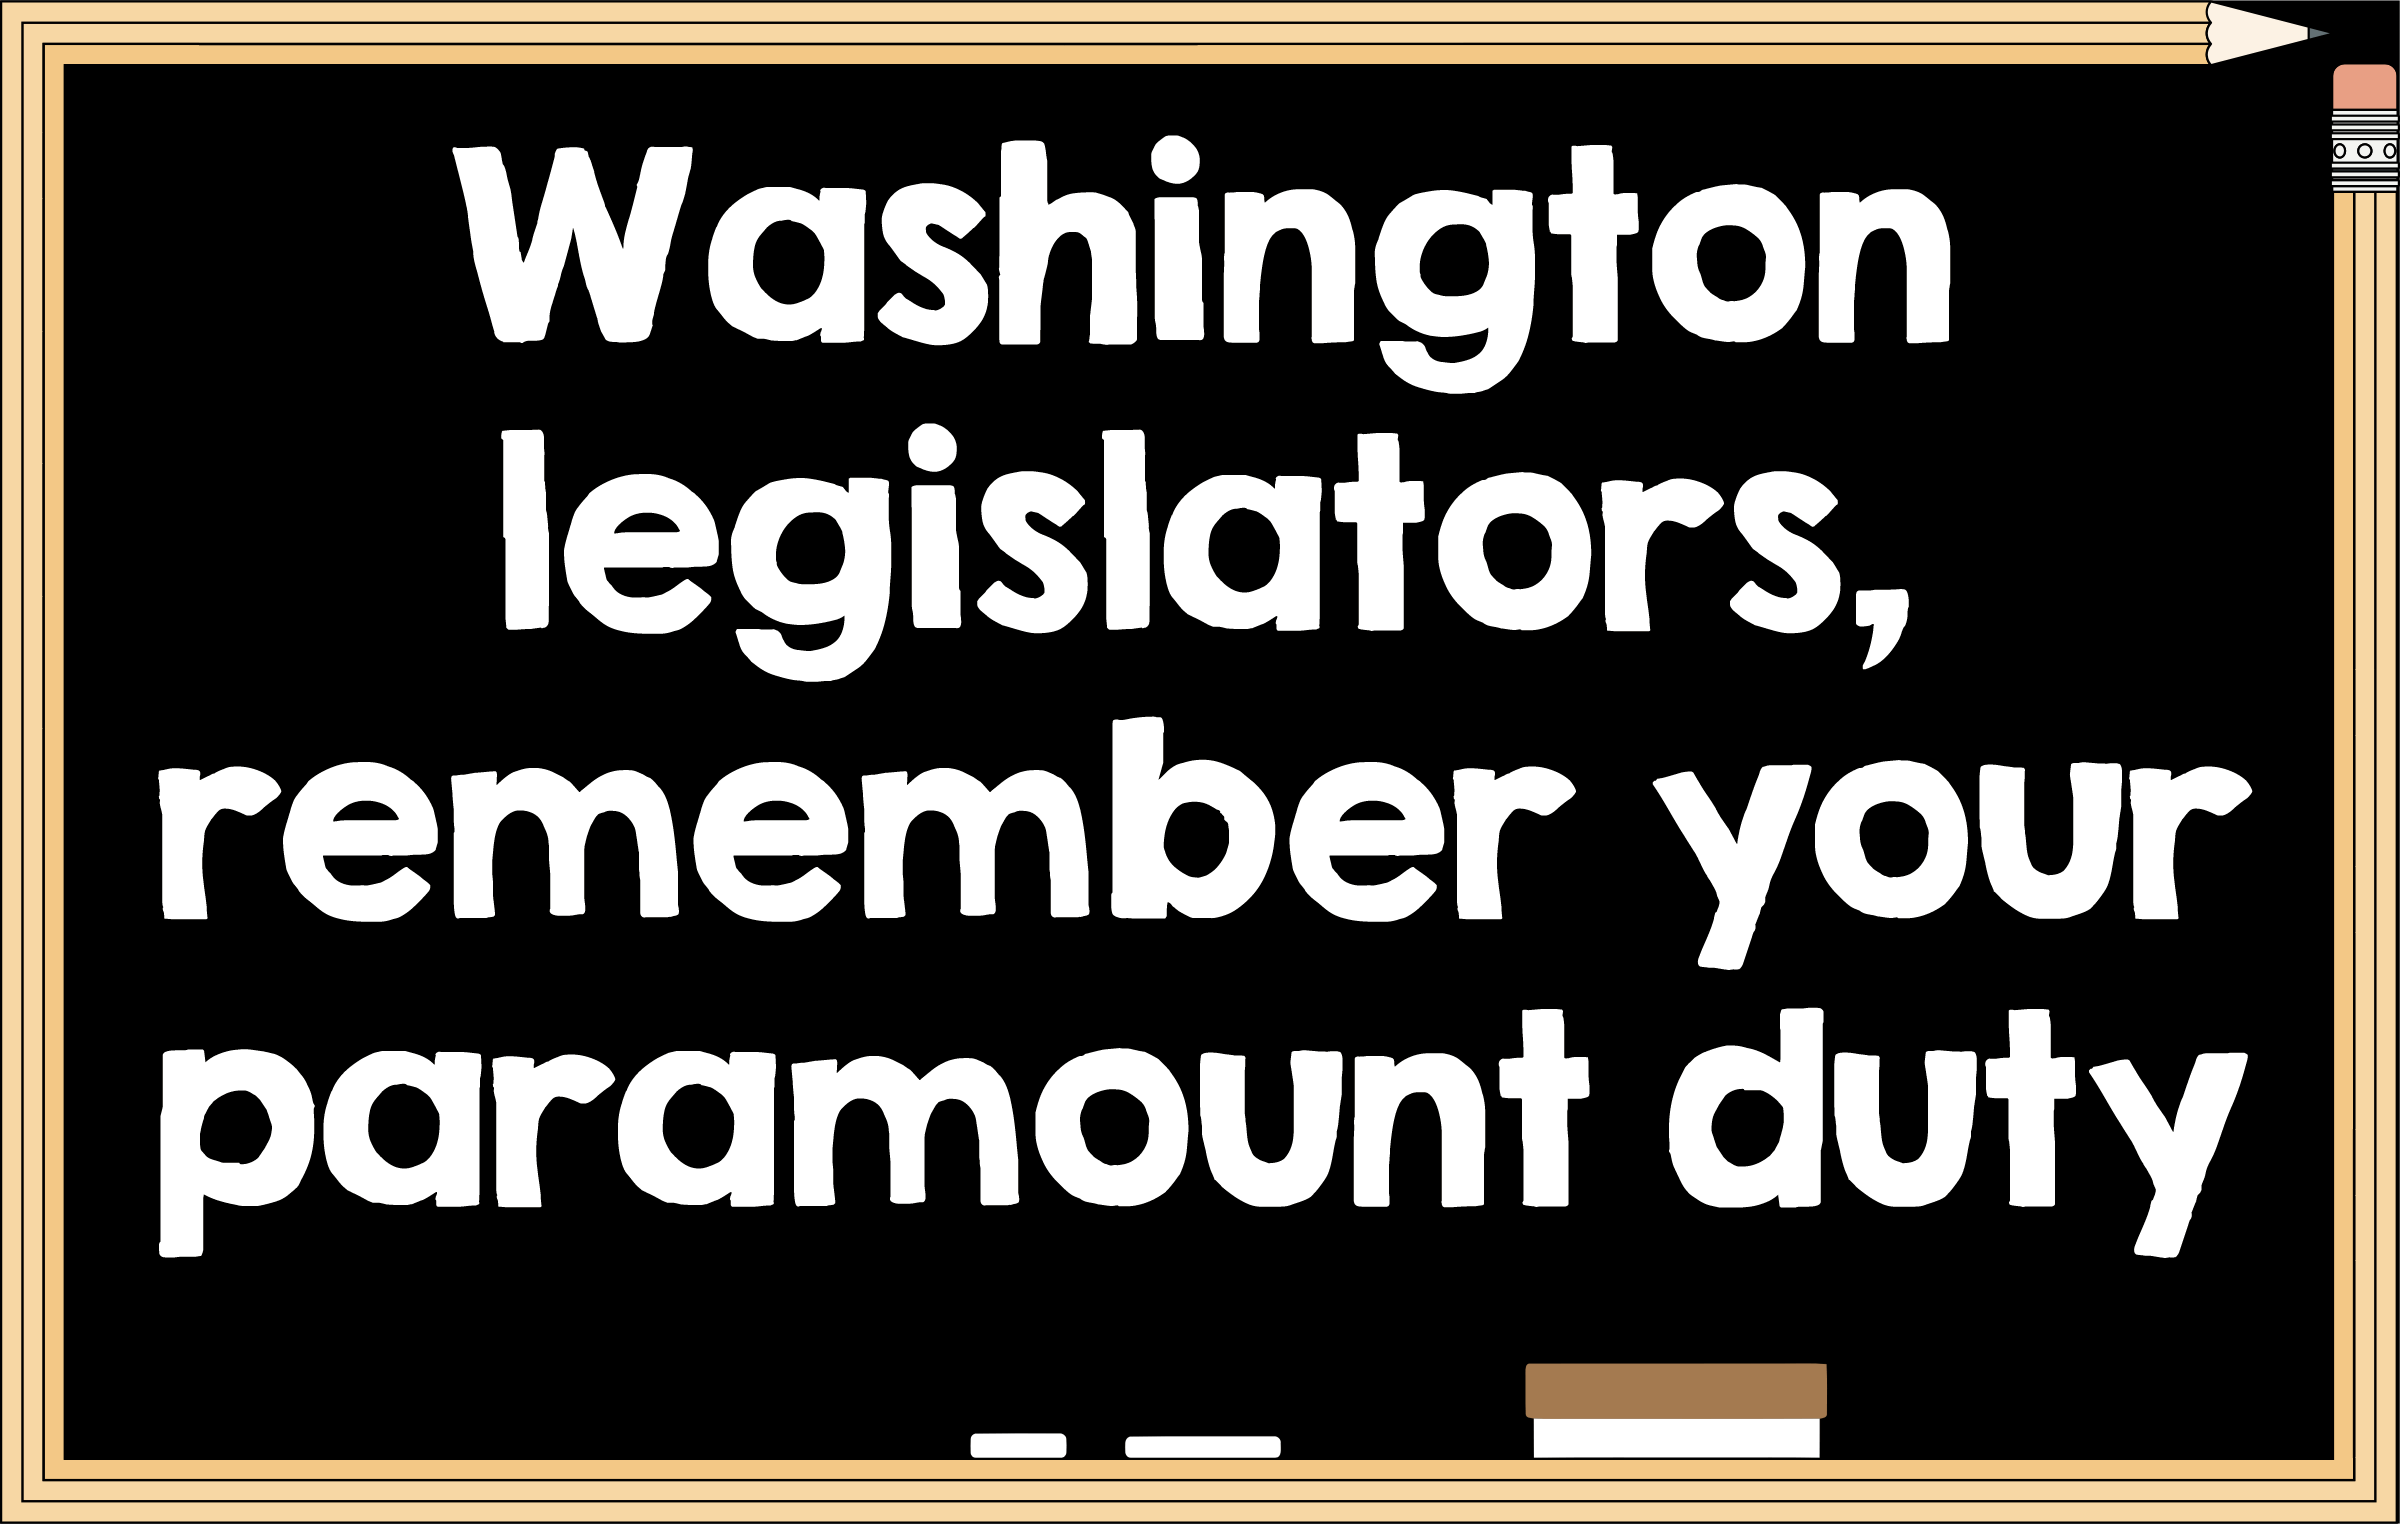 Washington legislators, remember your paramount duty